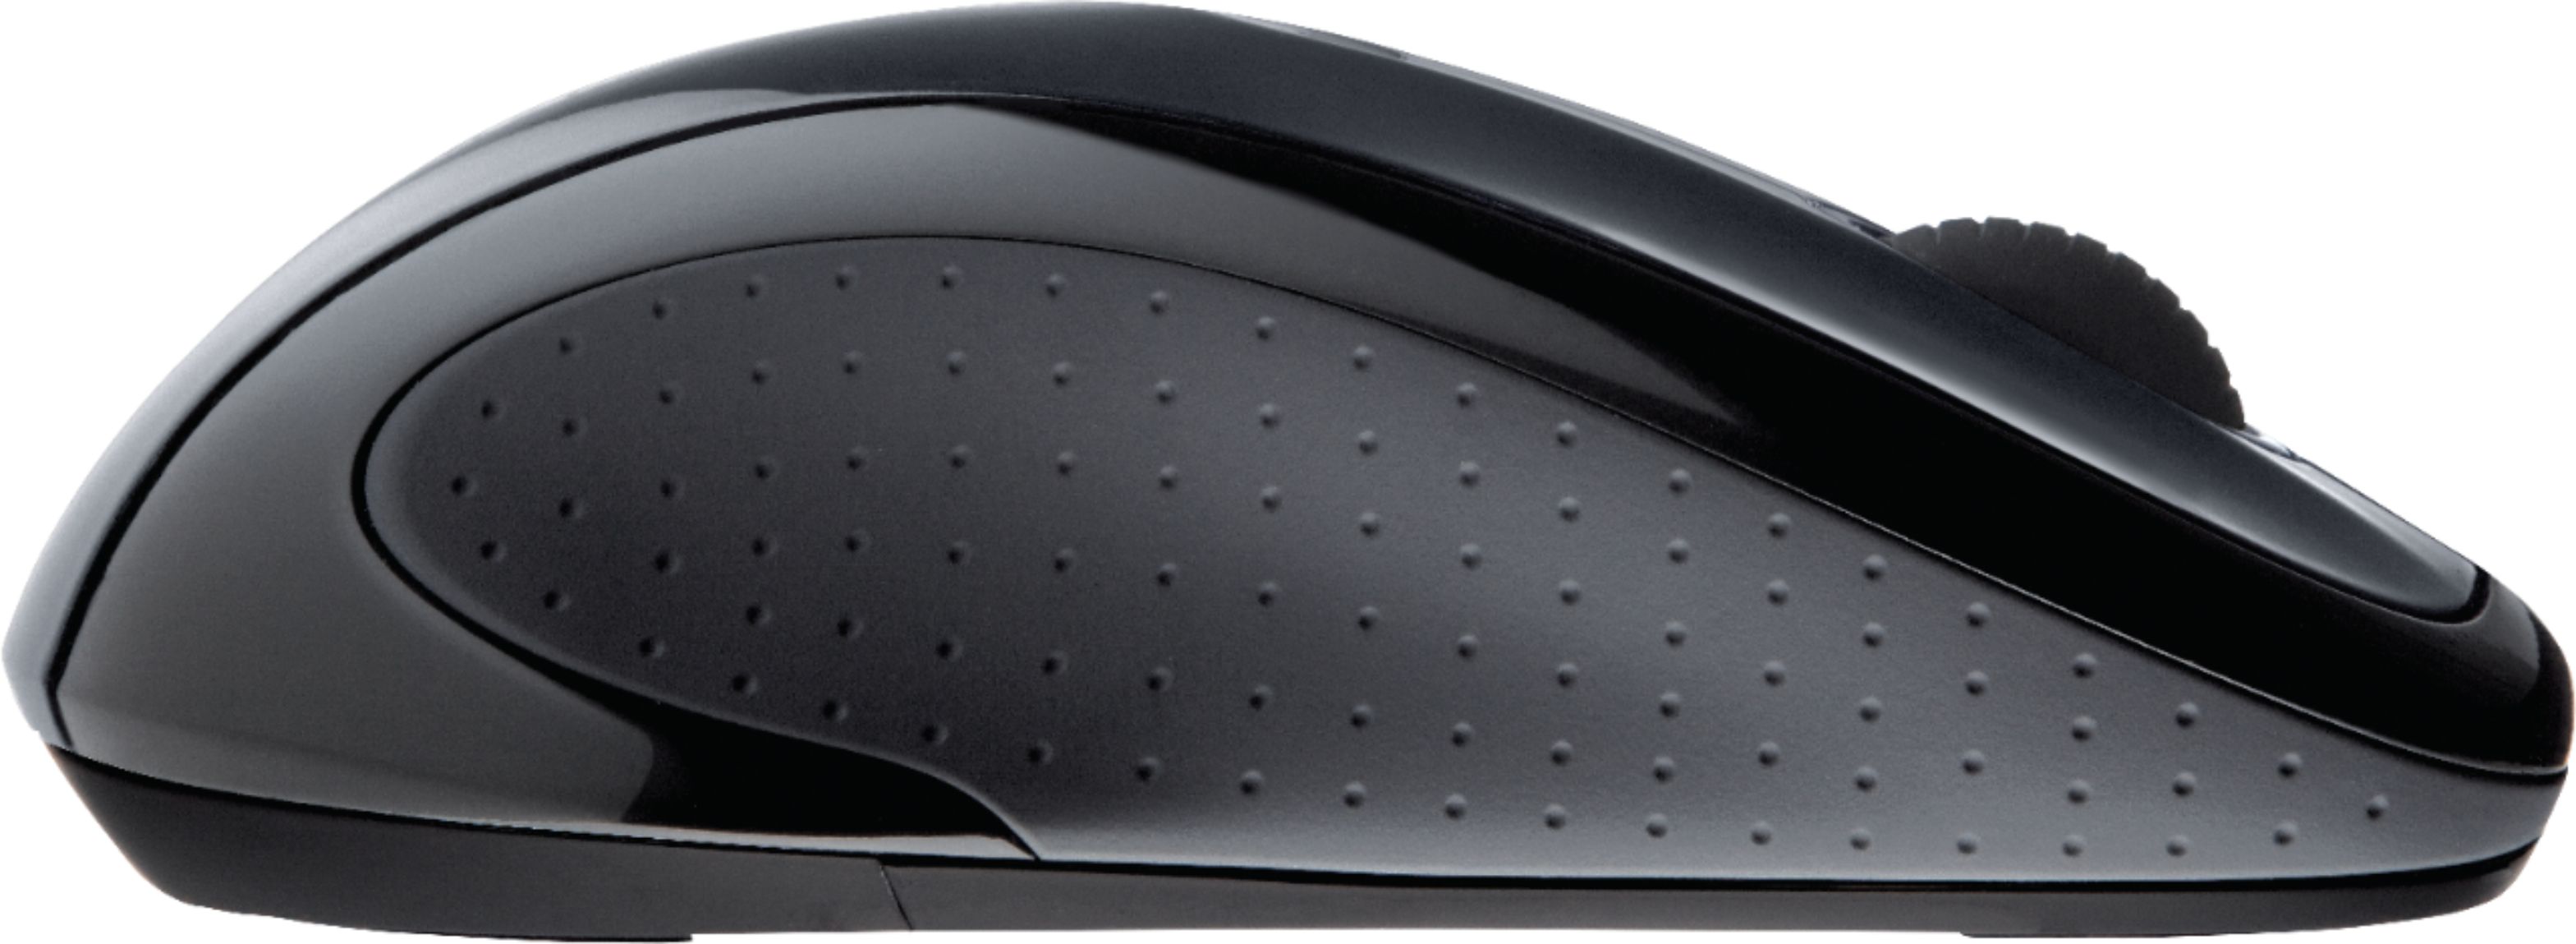 Logitech M510 Wireless Mouse (Black) 910-001822 B&H Photo Video